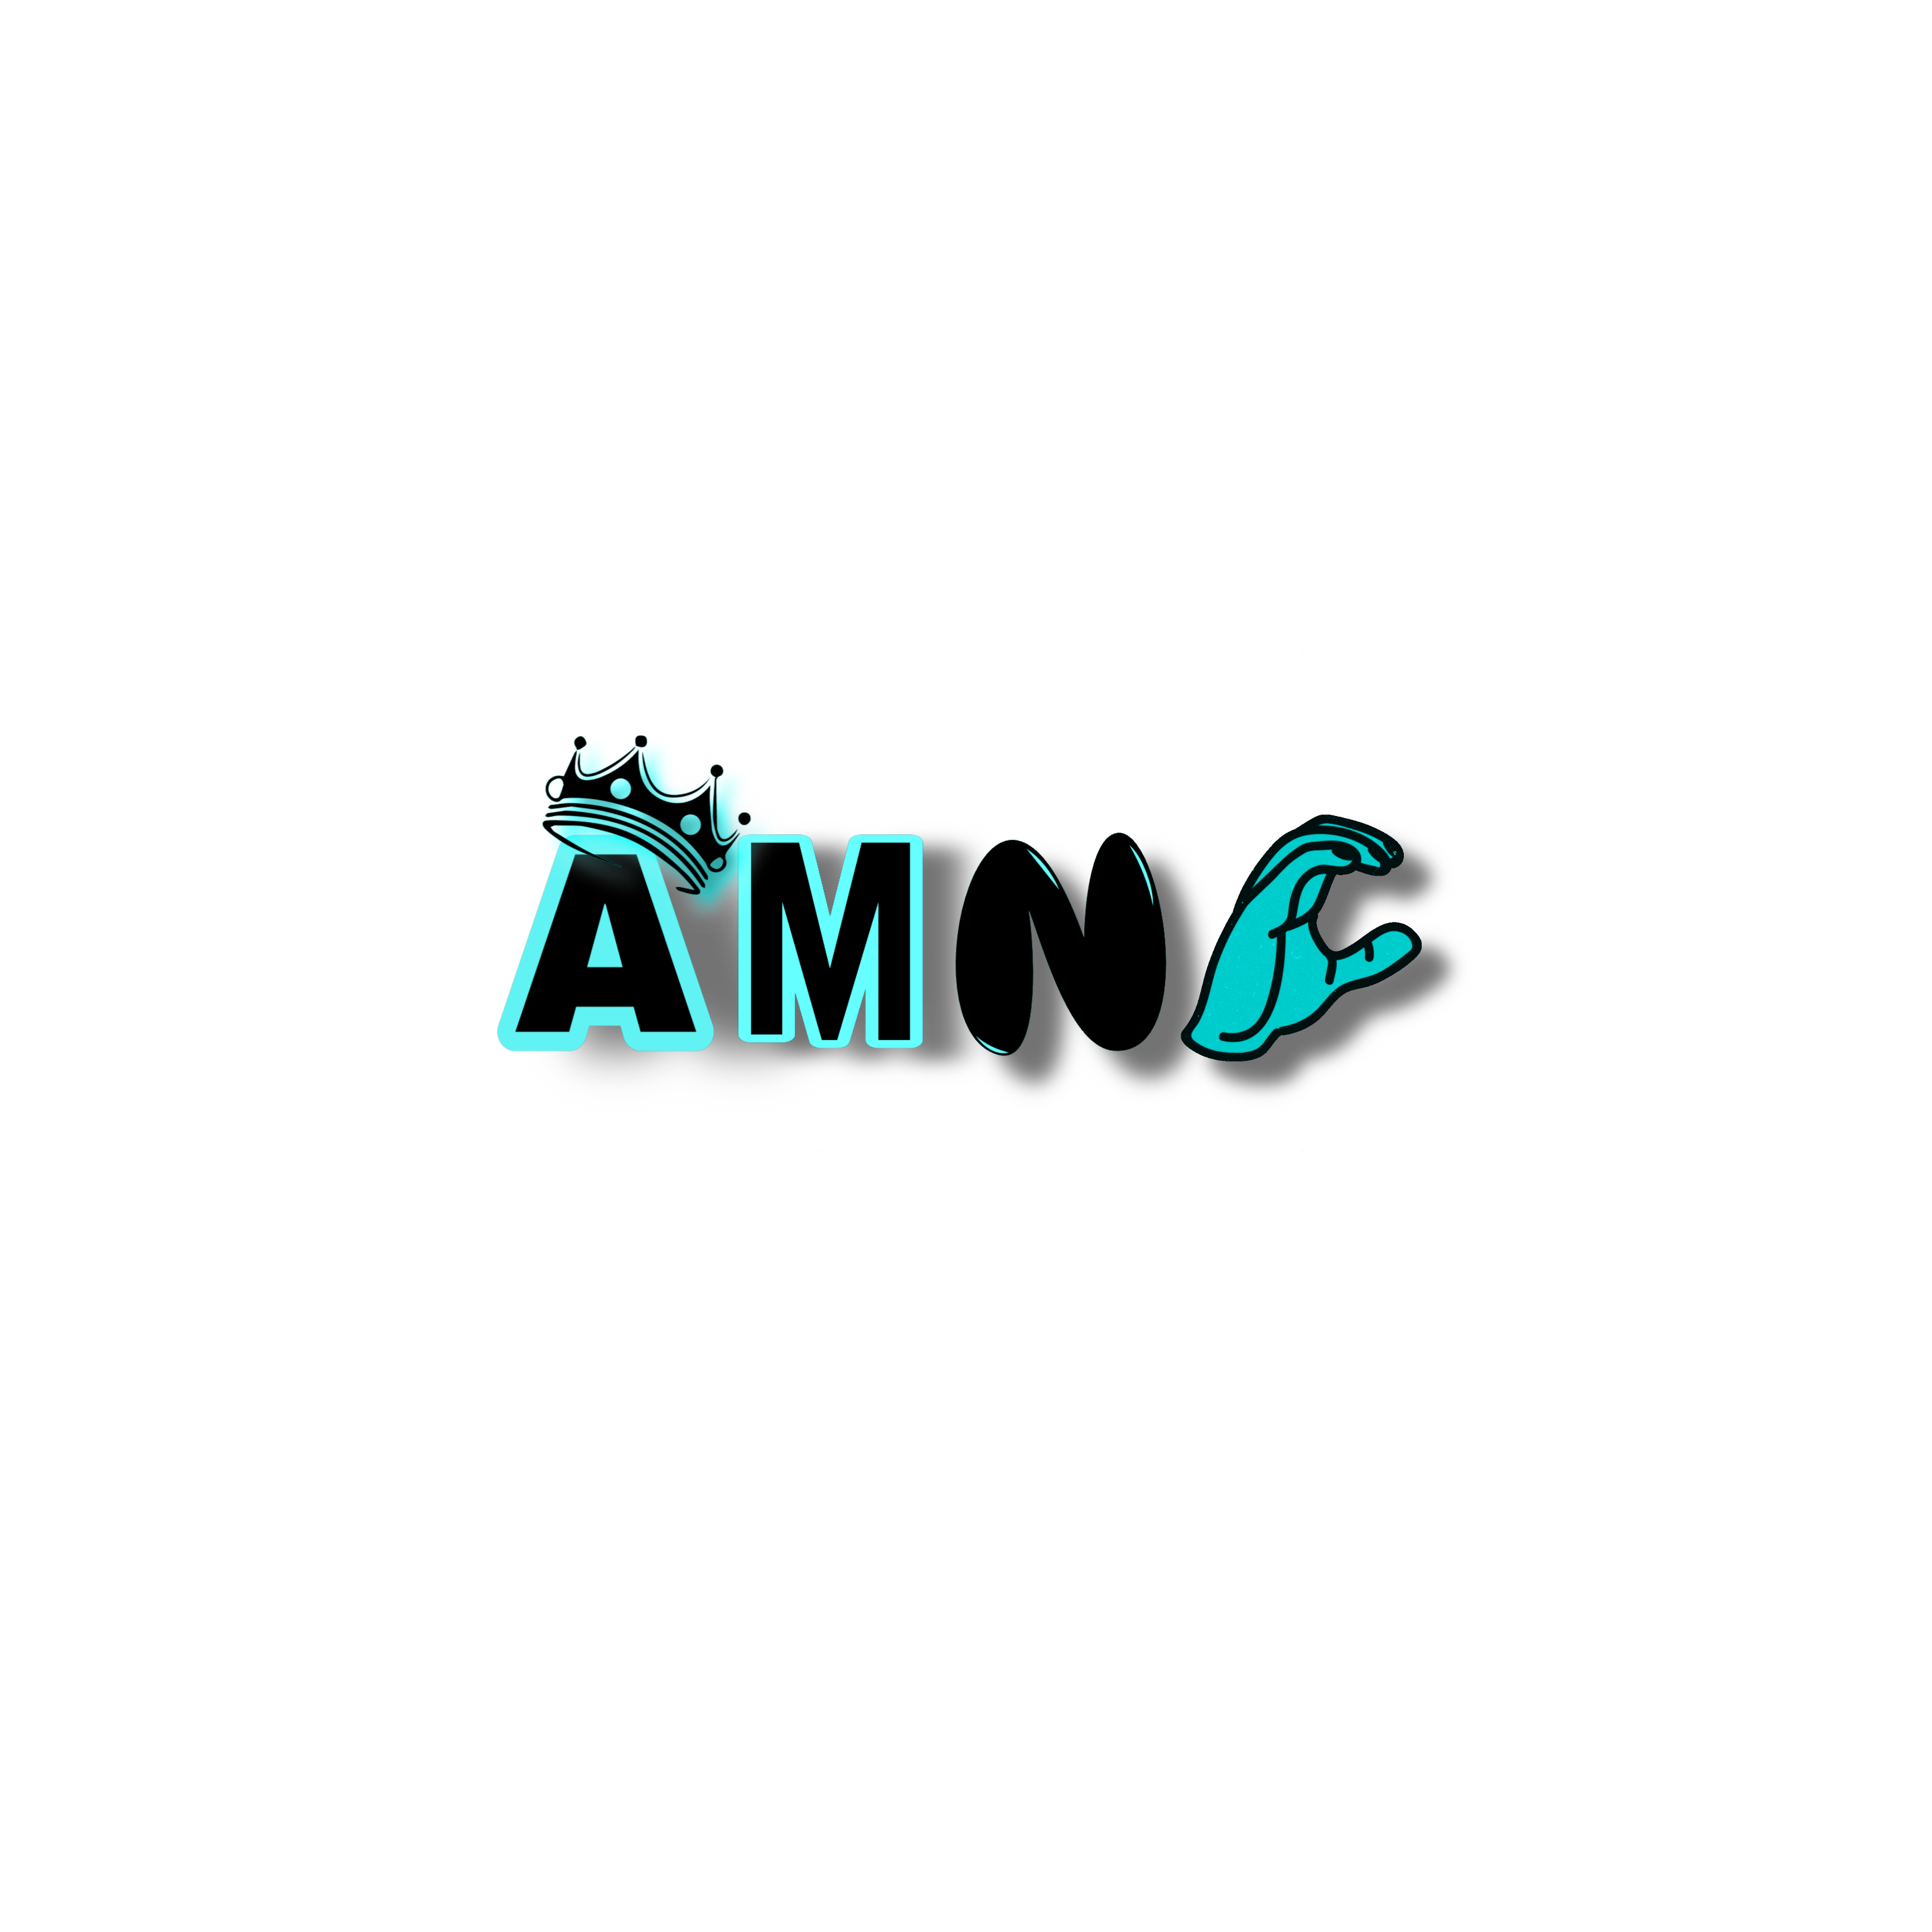 AMNC Media logo 1 